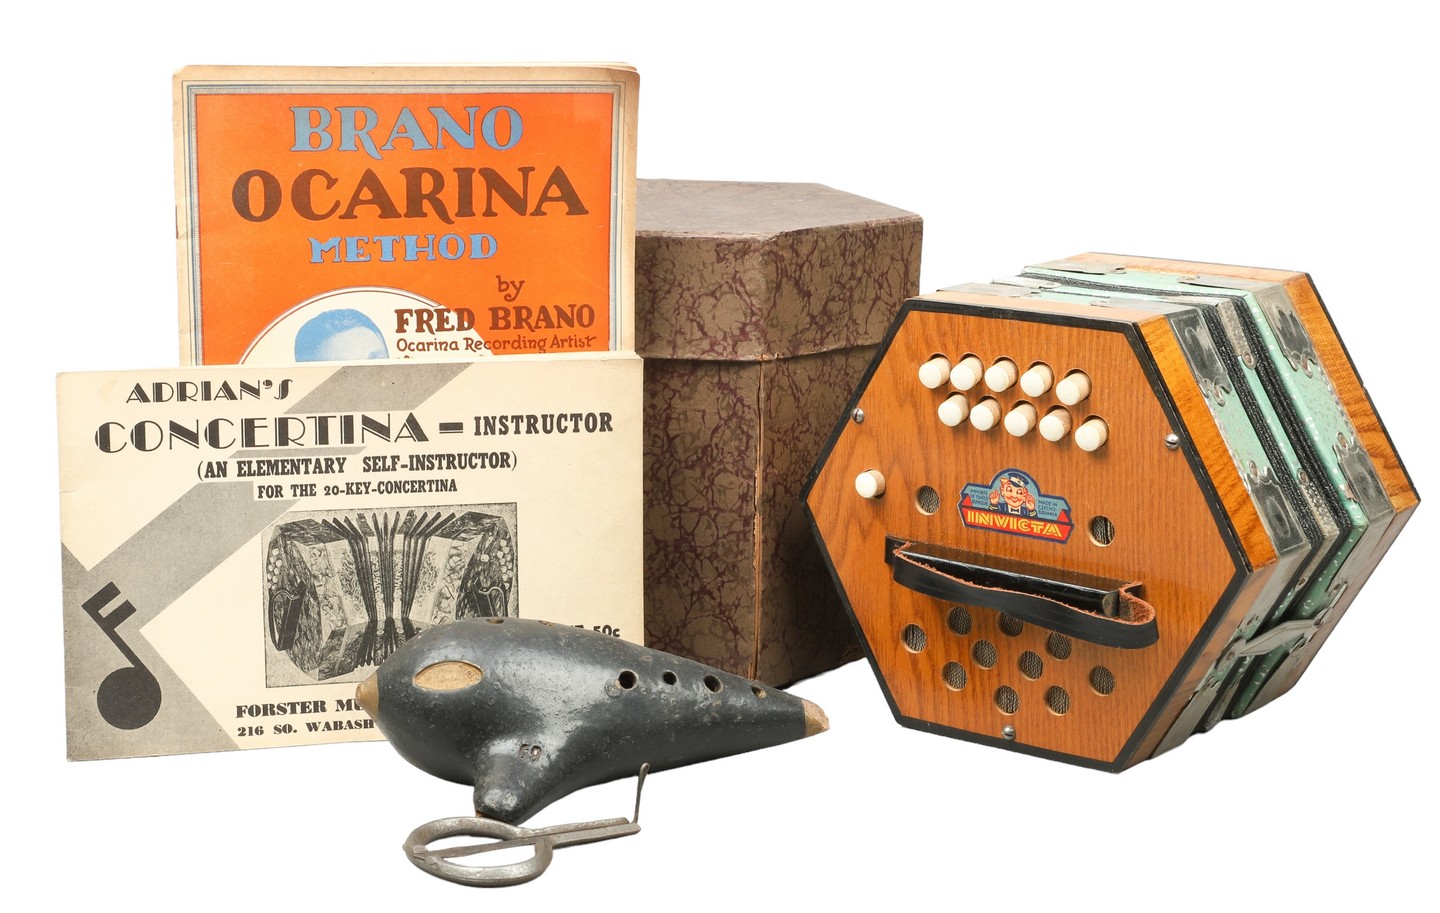 (3) Musical instruments, c/o Invicta